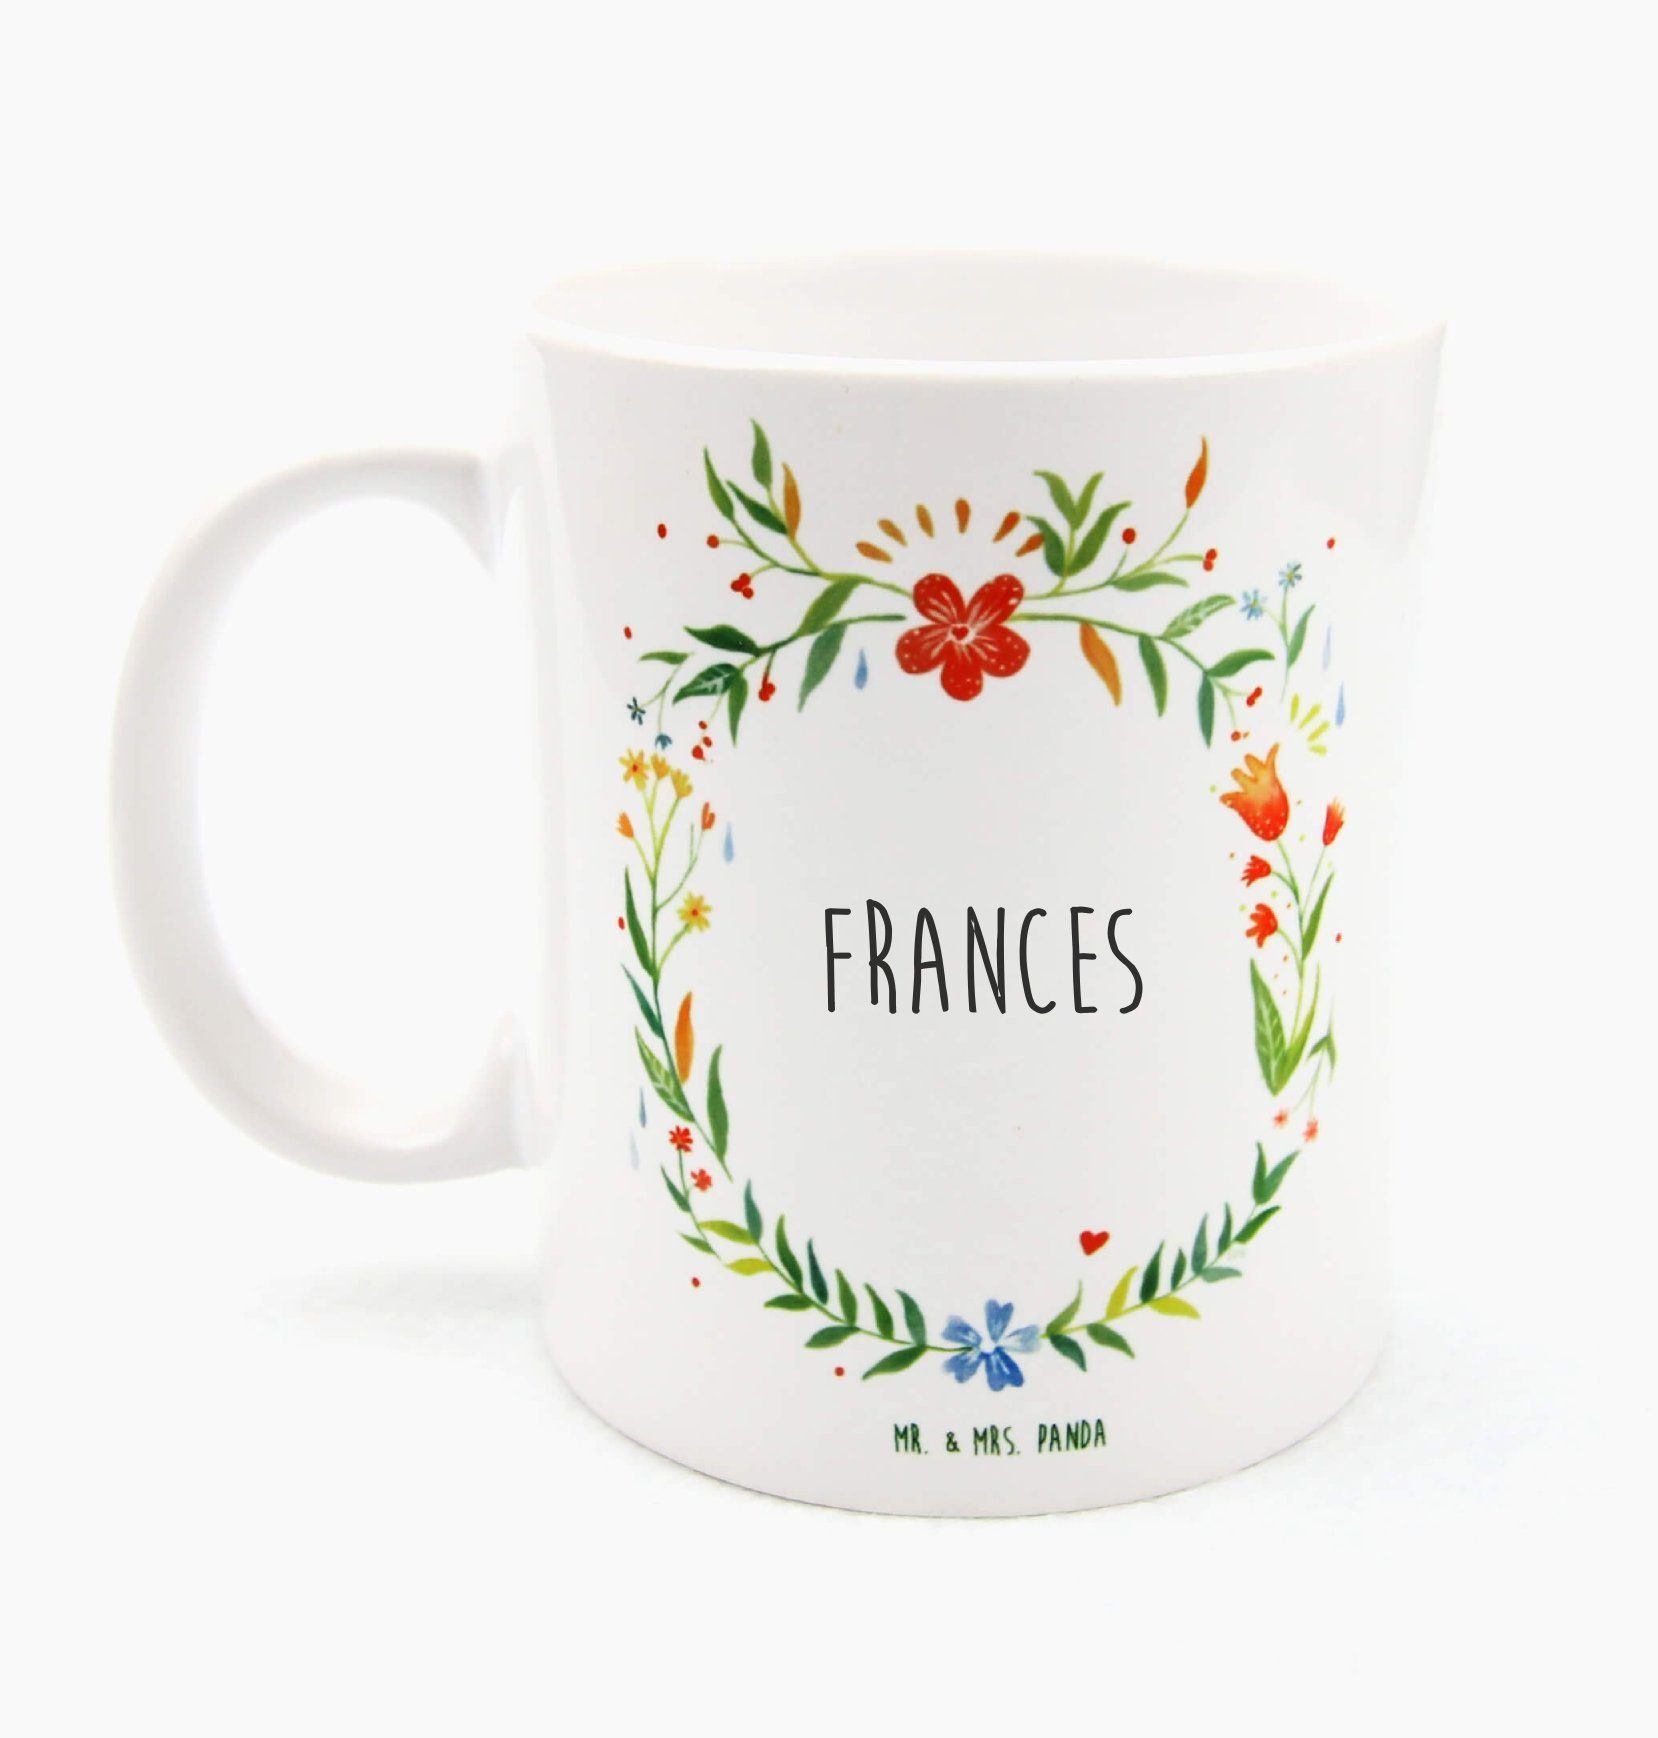 Mr. & Mrs. Panda Tasse Frances - Geschenk, Büro Tasse, Tasse, Kaffeetasse, Tasse Motive, Bec, Keramik